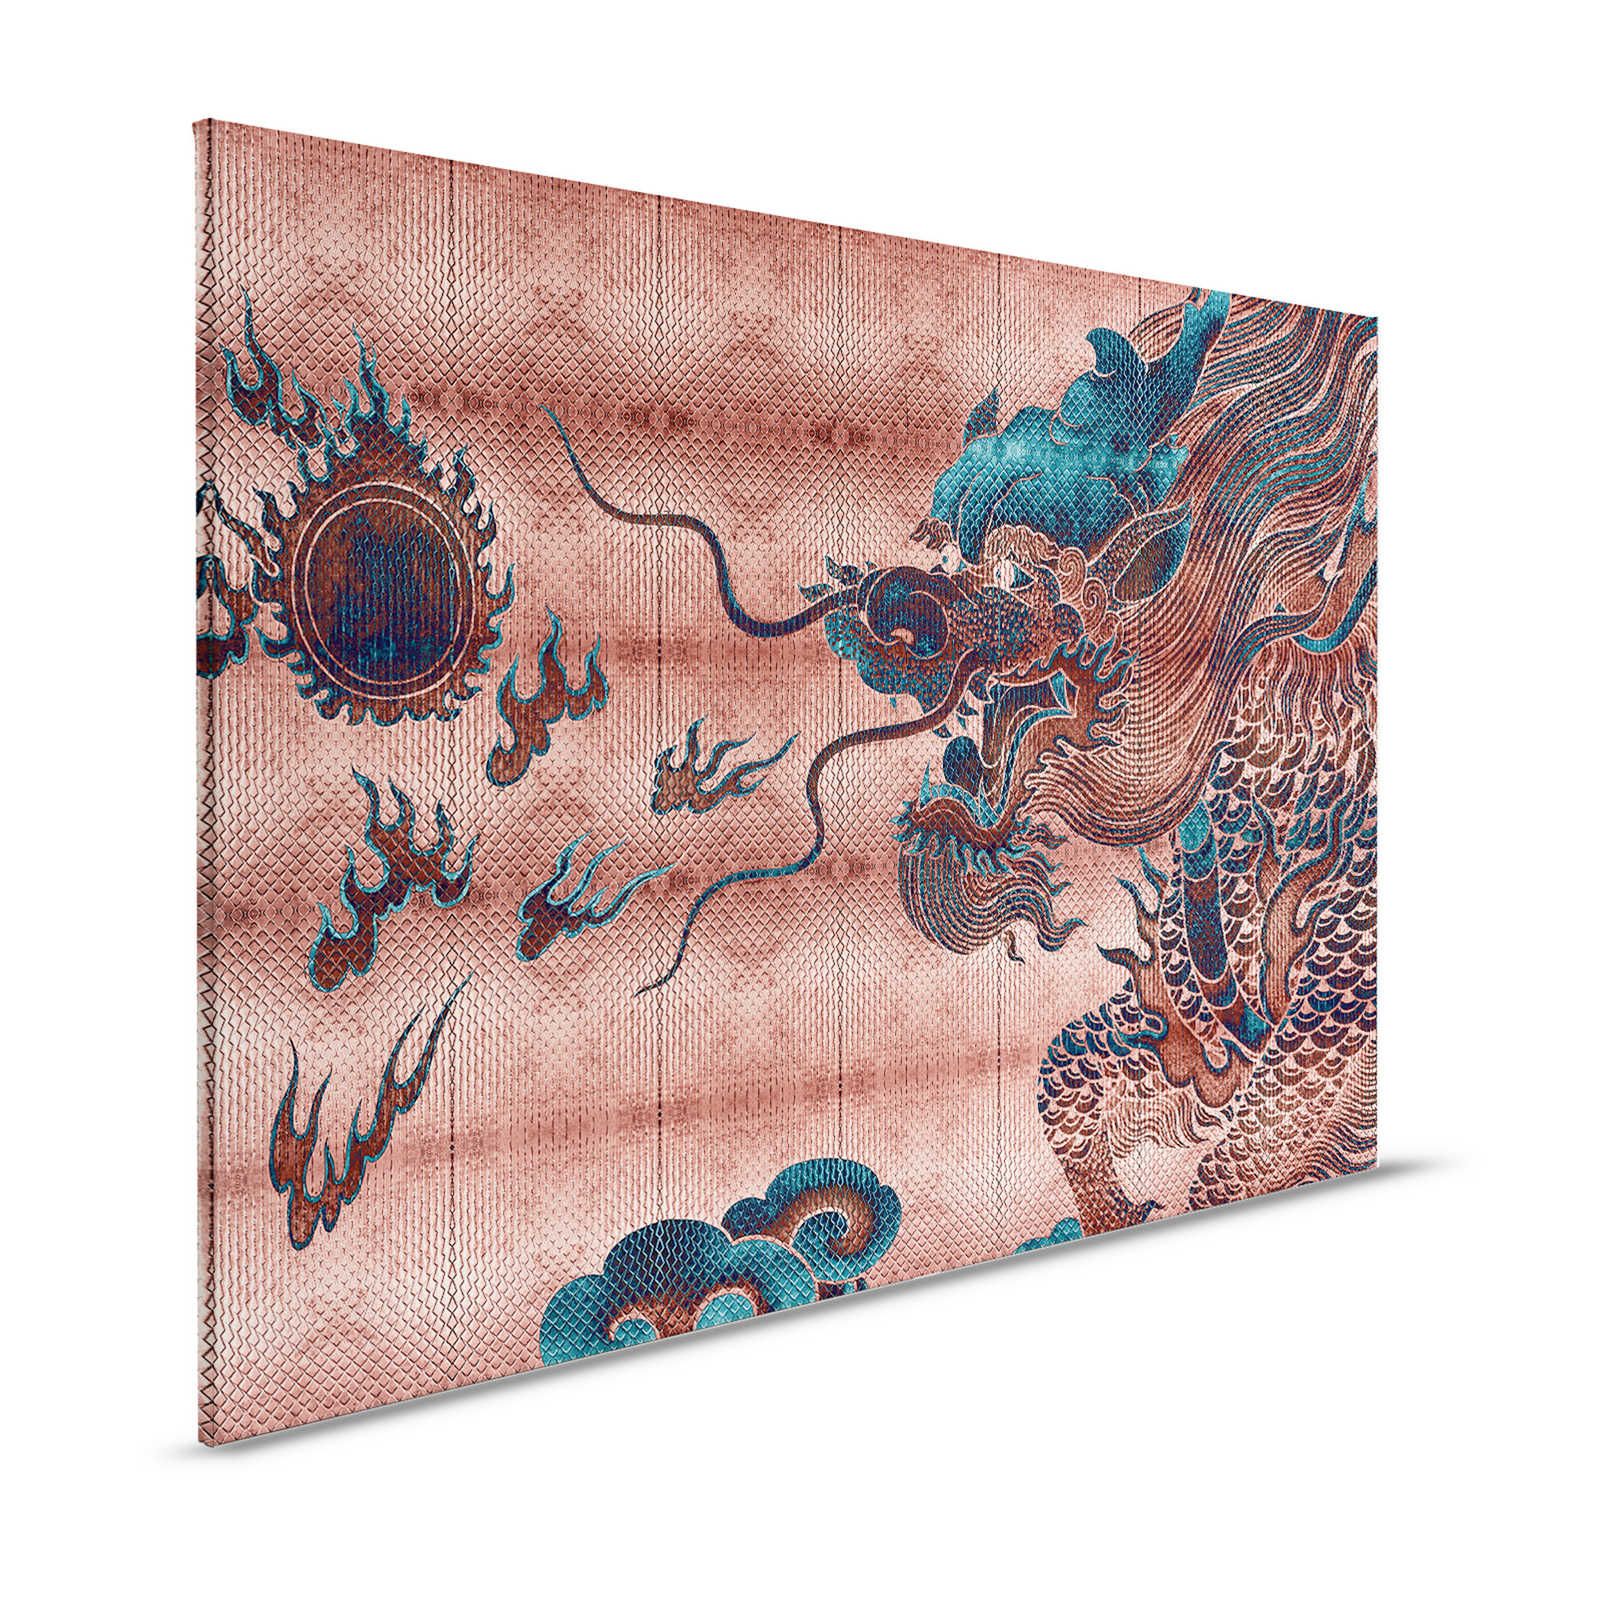 Shenzen 1 - Canvas schilderij Dragon Asian Syle met metallic kleuren - 1,20 m x 0,80 m
